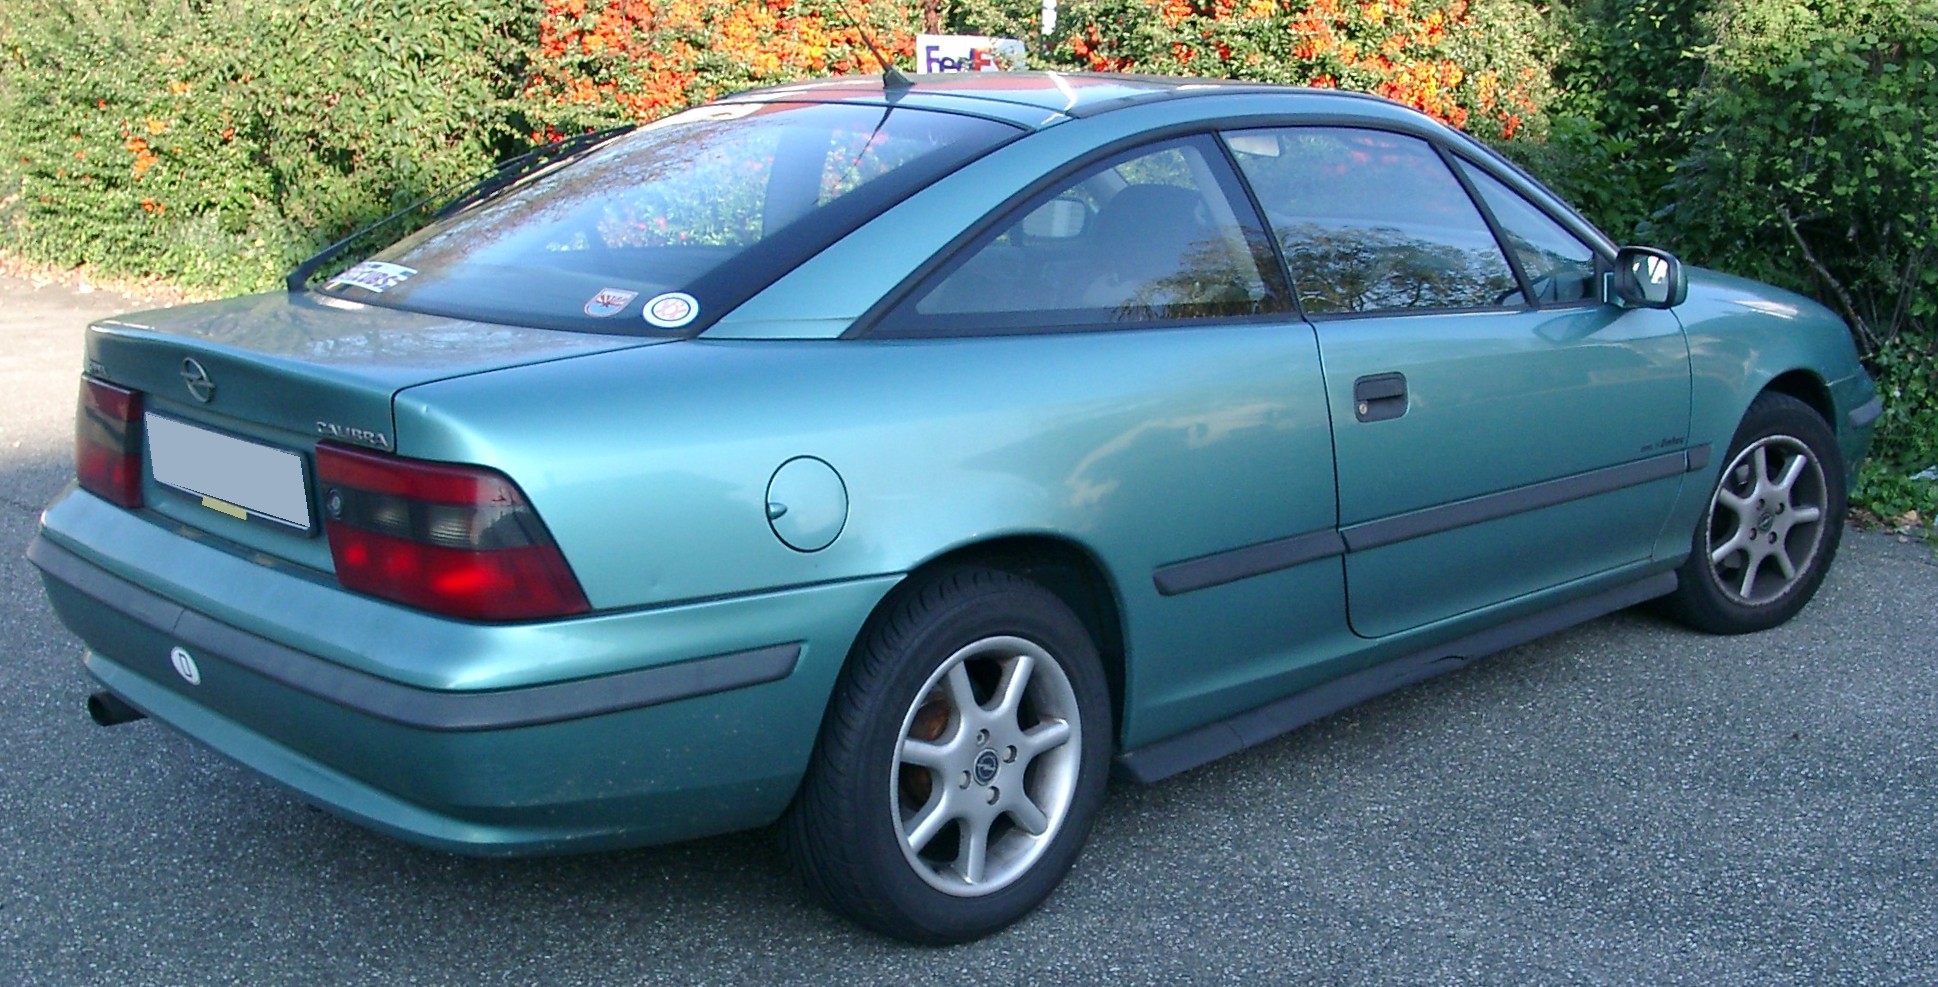 File:Opel Calibra rear 20071007.jpg - Wikimedia Commons